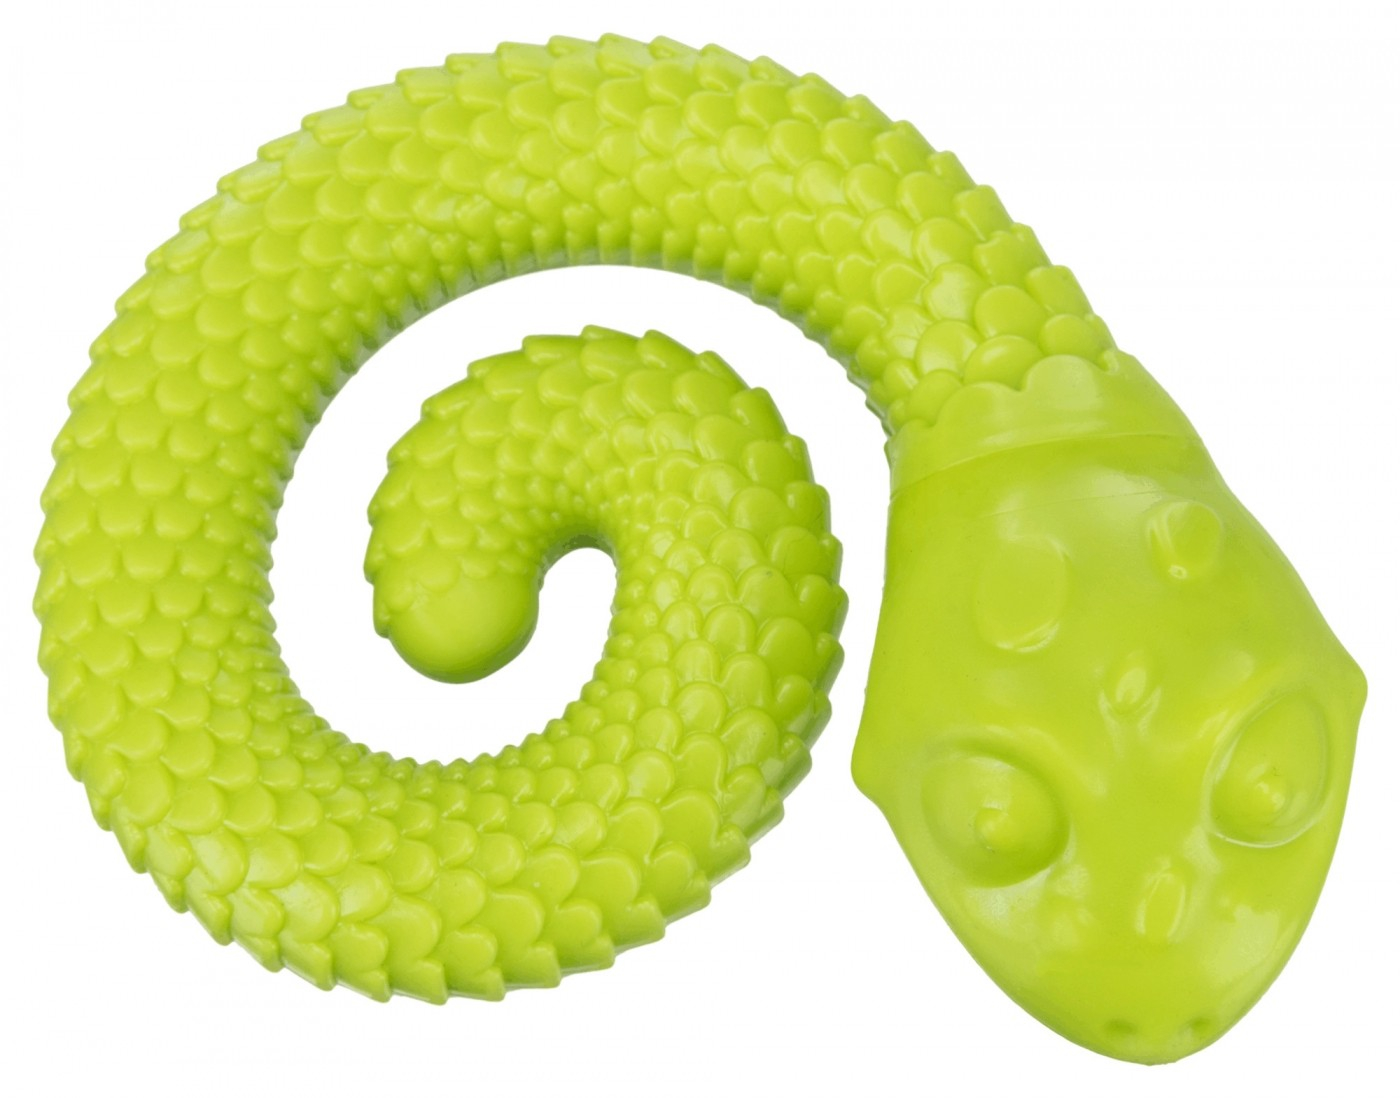 Cauda de doces Snack Serpente em borracha, diâmetro 18 cm